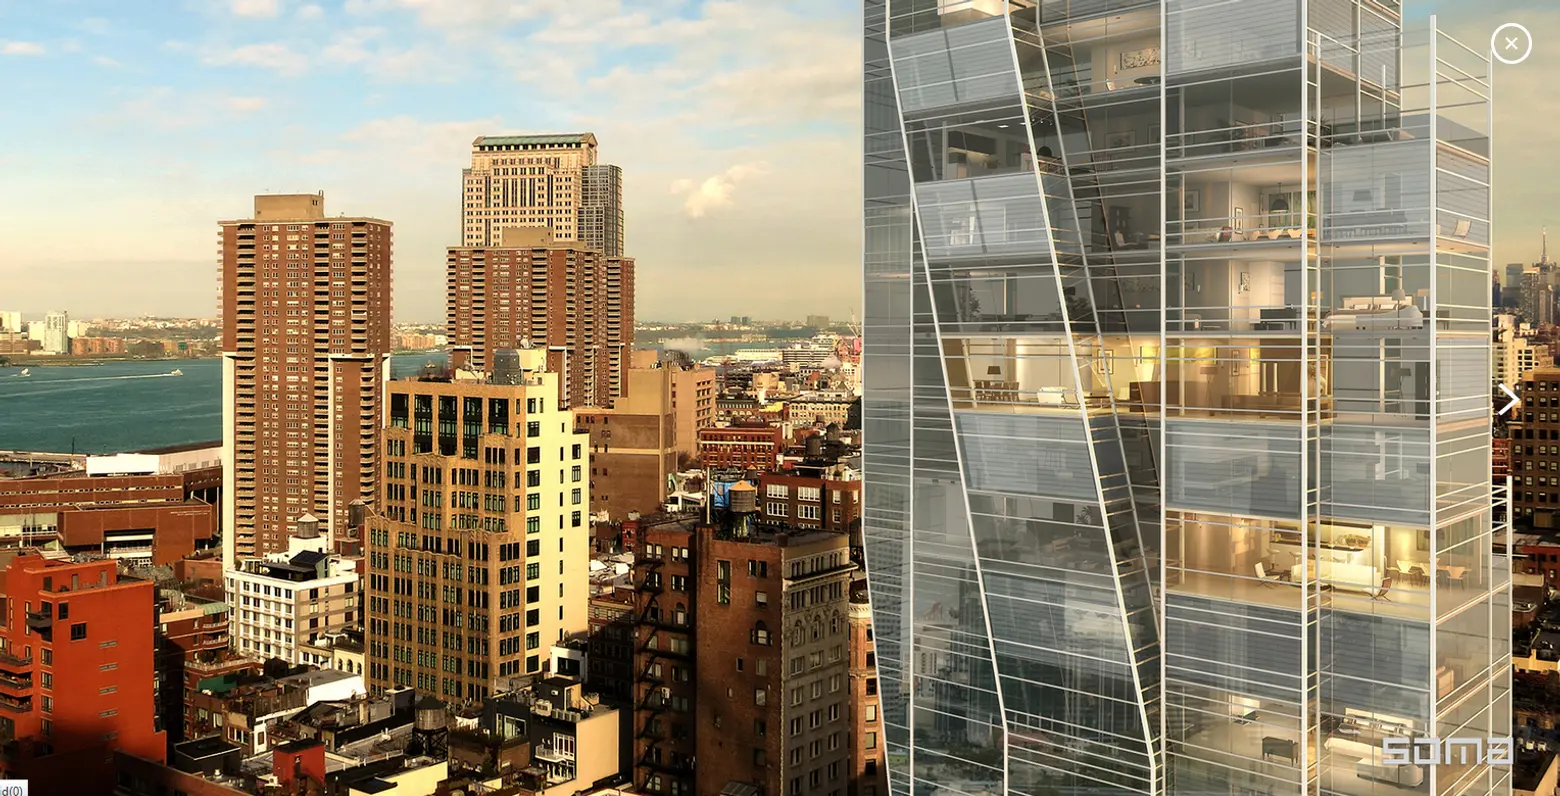 45 Park, Tribeca COndo, Manhattan Luxury, NYC developments, Supertall skyscrapers, WTC mosque